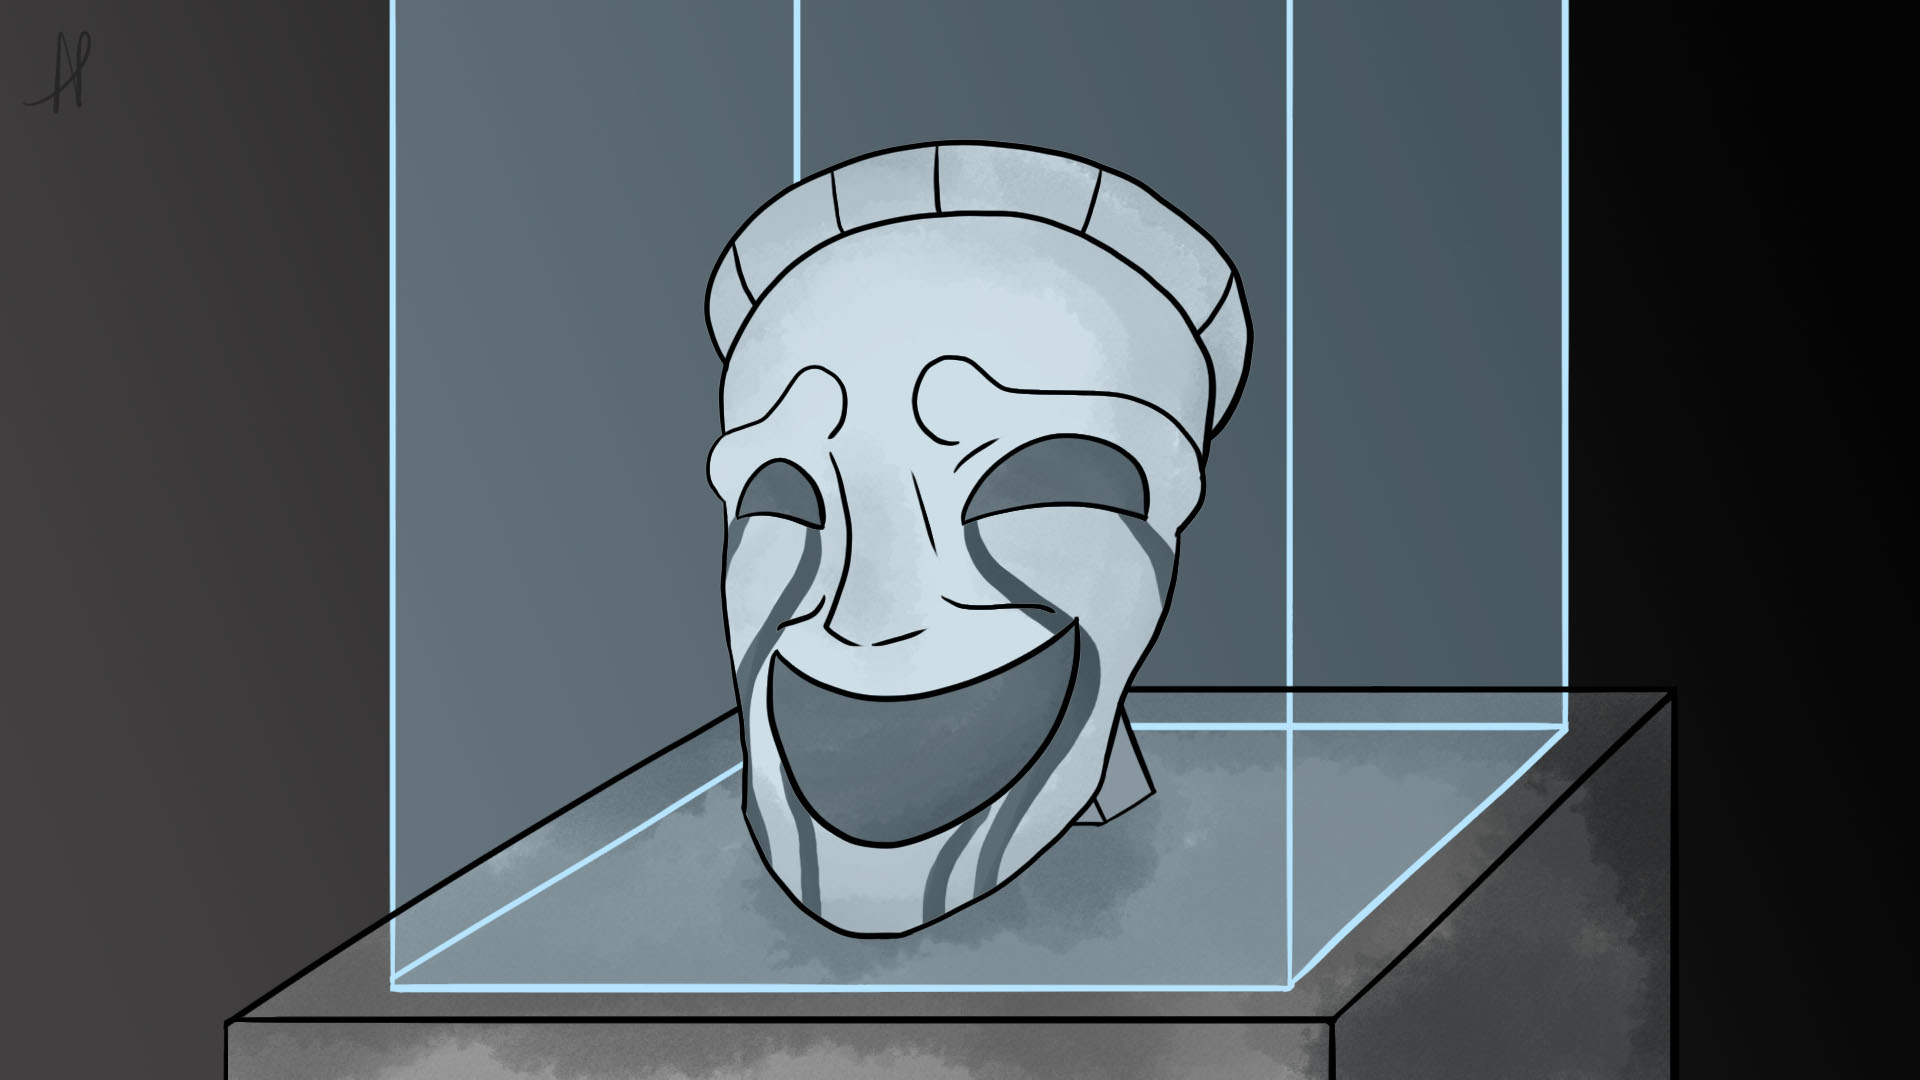 SCP-035 Possessive Mask (SCP Animation) 